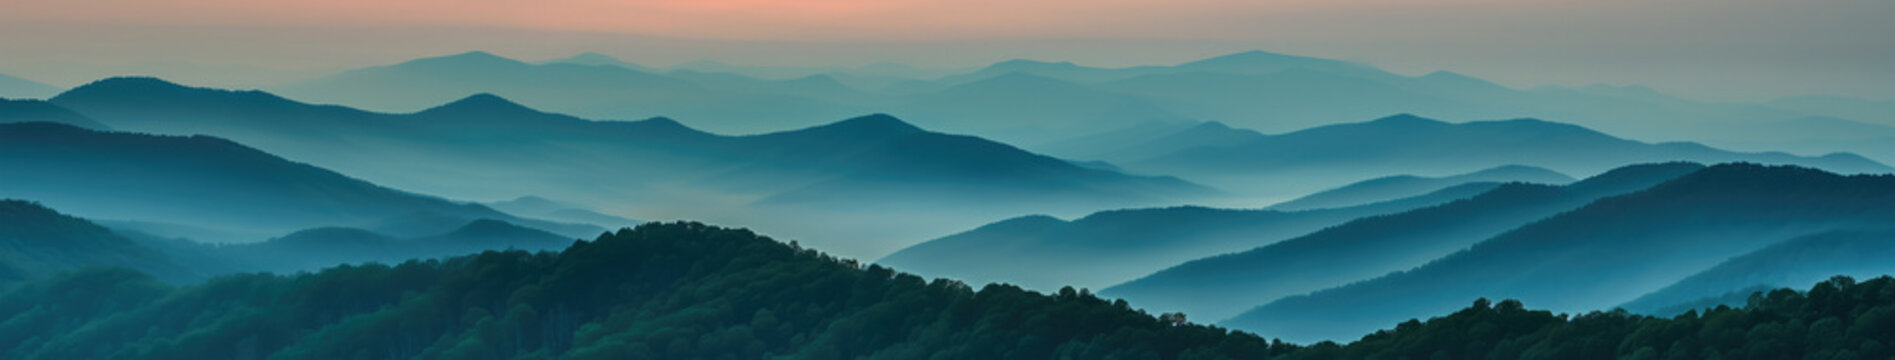 Sunset or sunrise panorama of smoky mountain ridges banner, landscape, scenery.